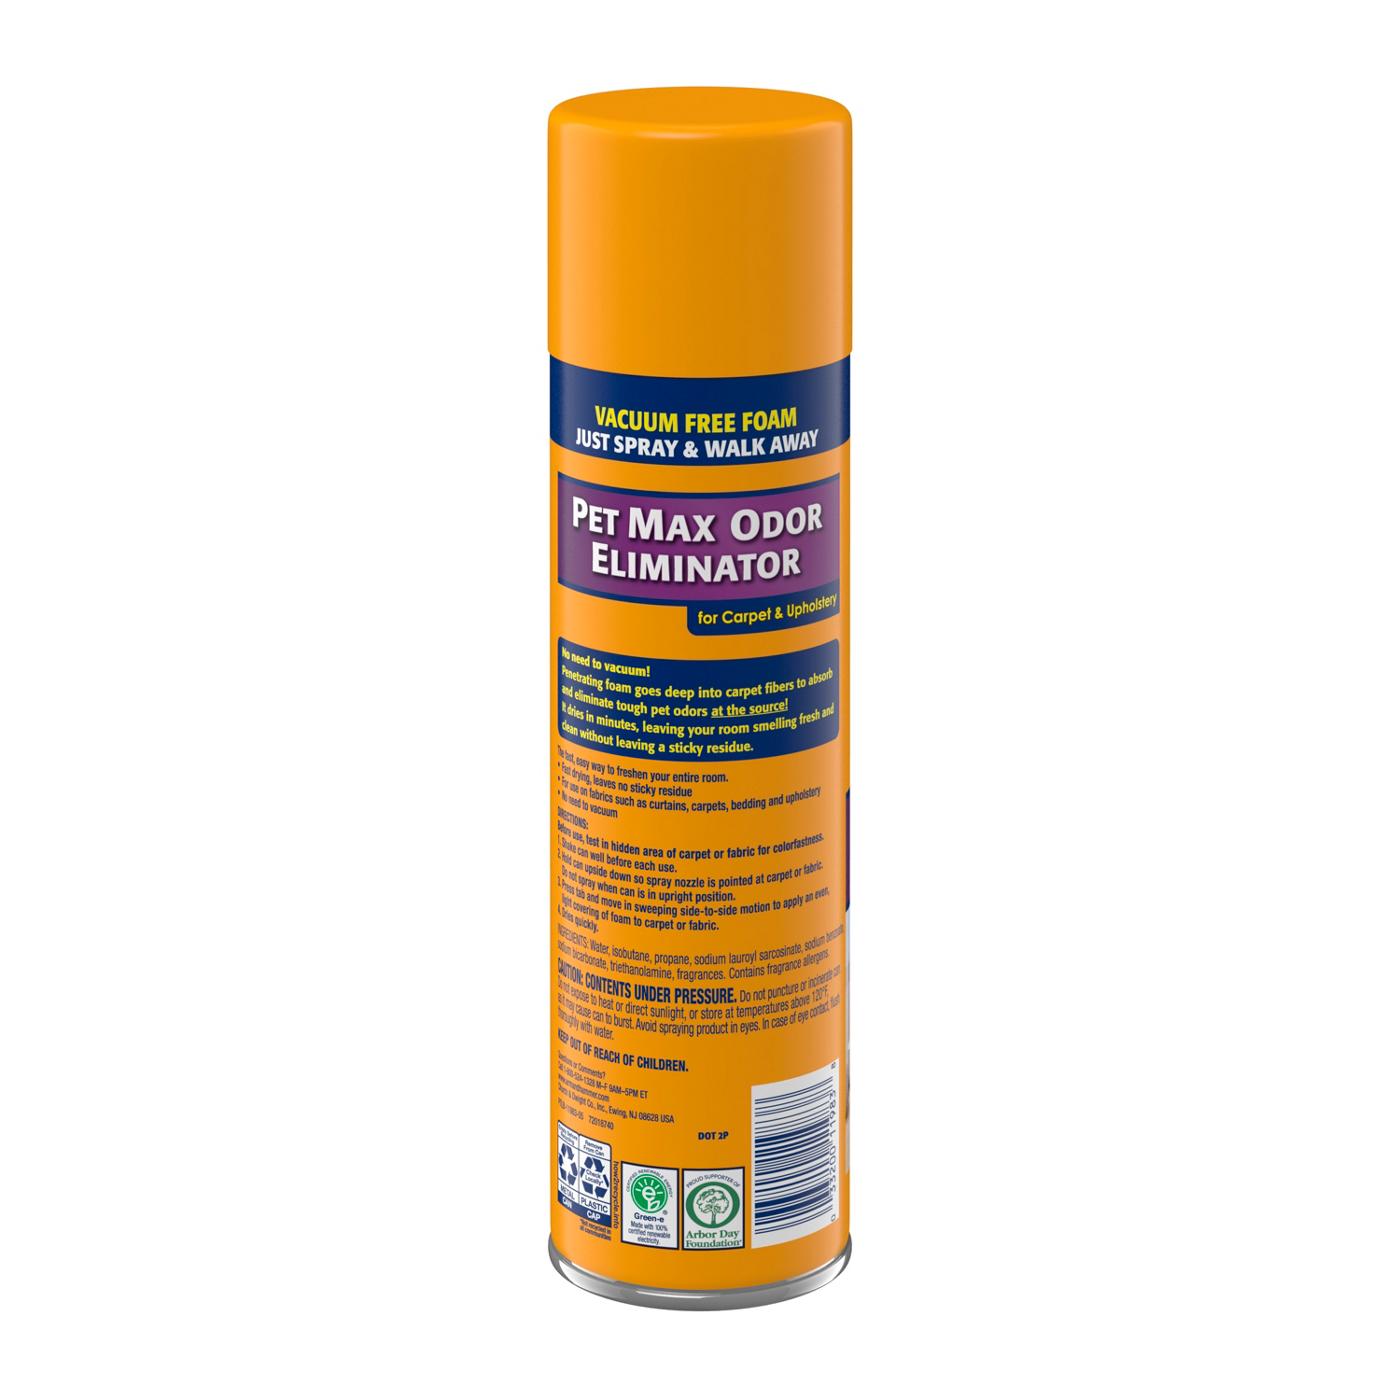 Arm & Hammer Max Odor Eliminator Vacuum Free Foam - Sunburst Fresh; image 2 of 2